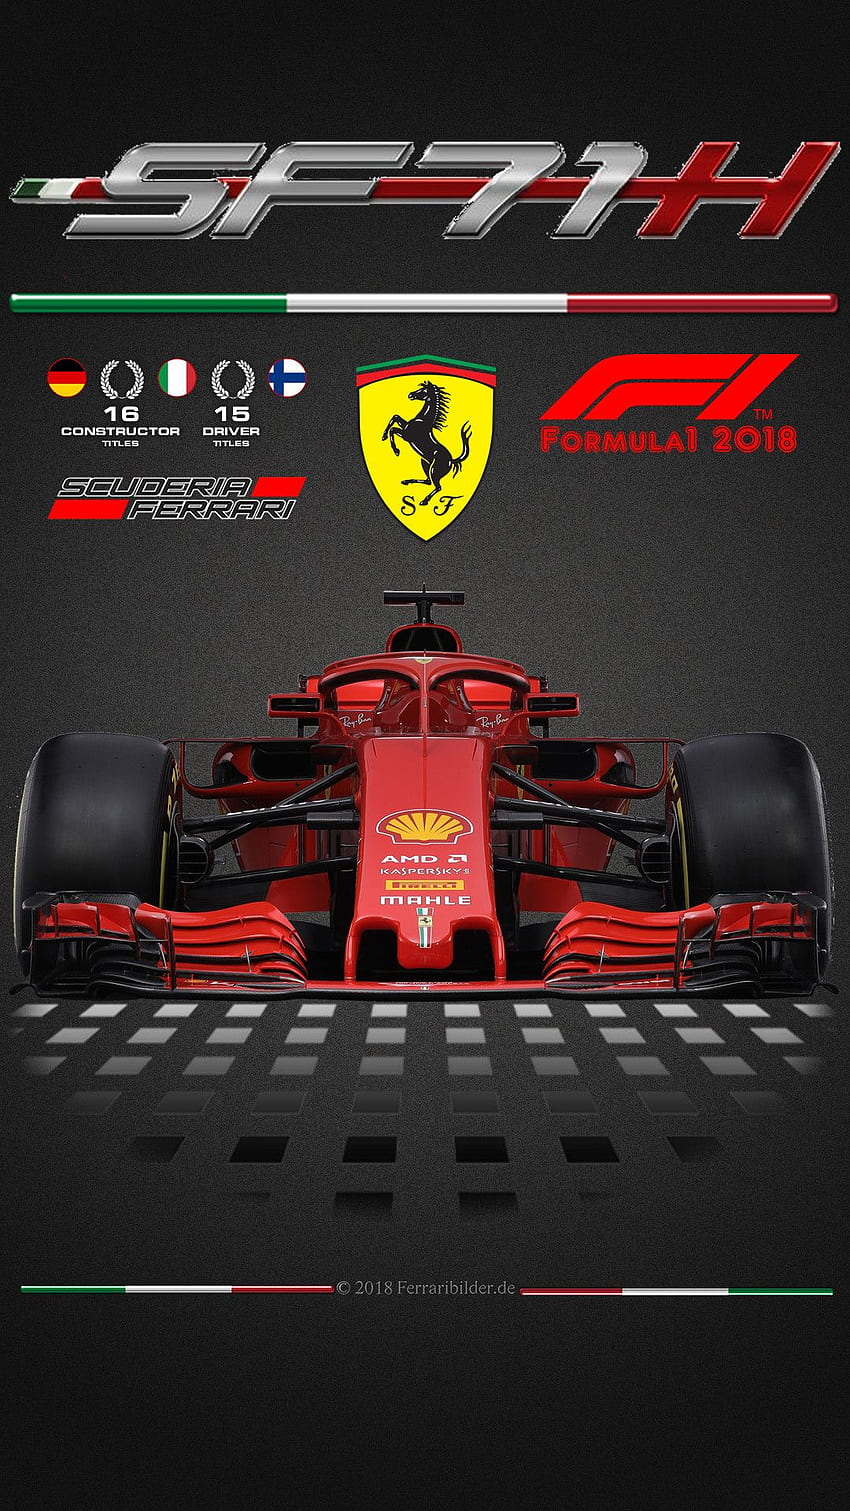 Scuderia Ferrari on Twitter F1Testing wallpapers Weve got those too   essereFerrari  httpstcoVrMUw0ktKe  Twitter